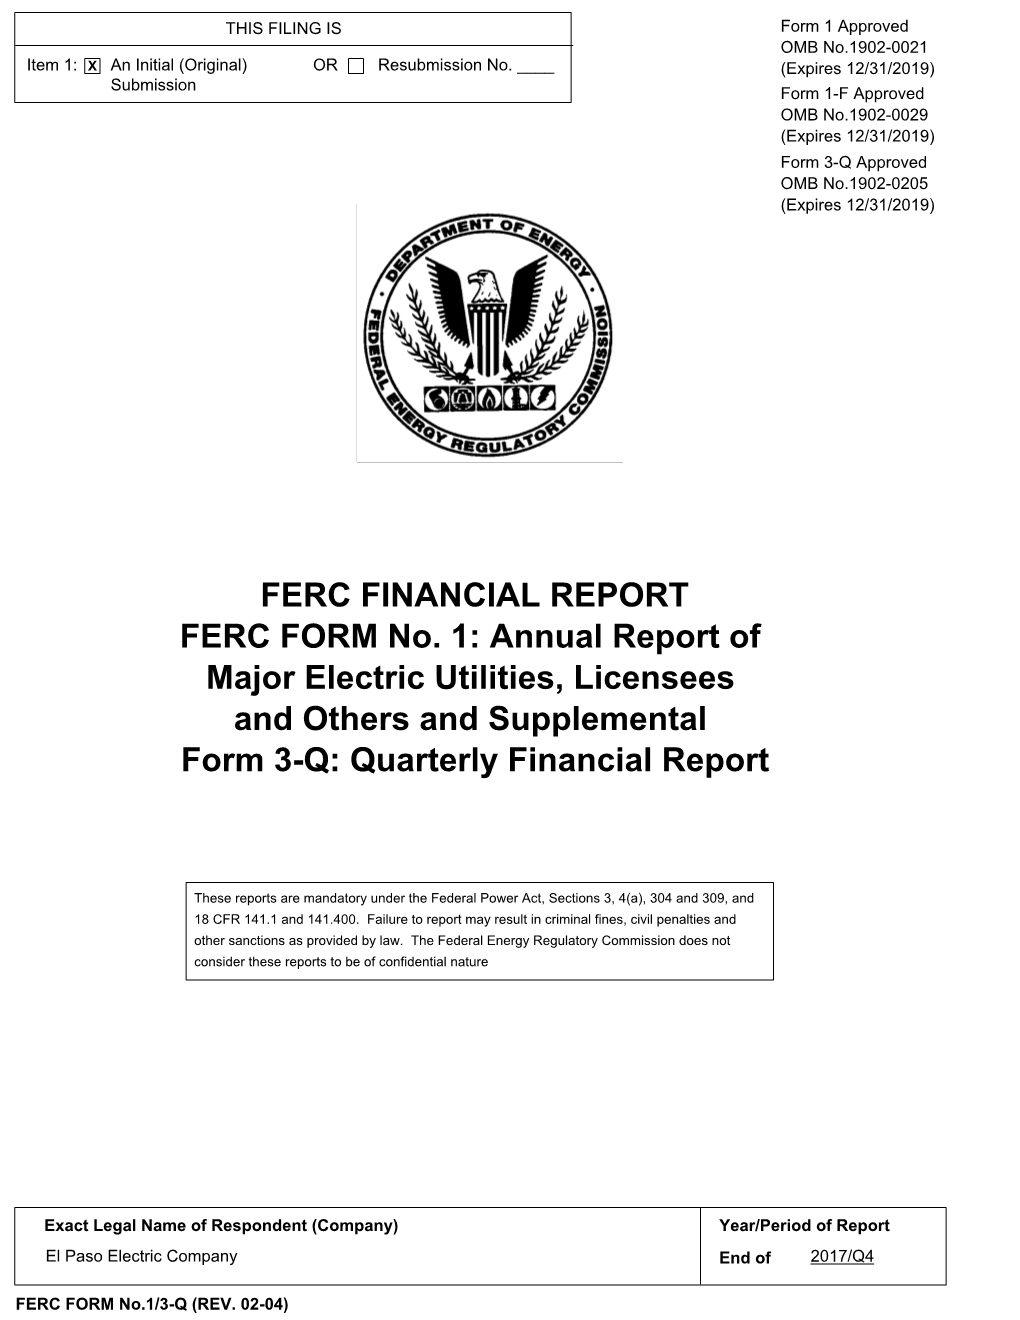 2017 Ferc Form 1